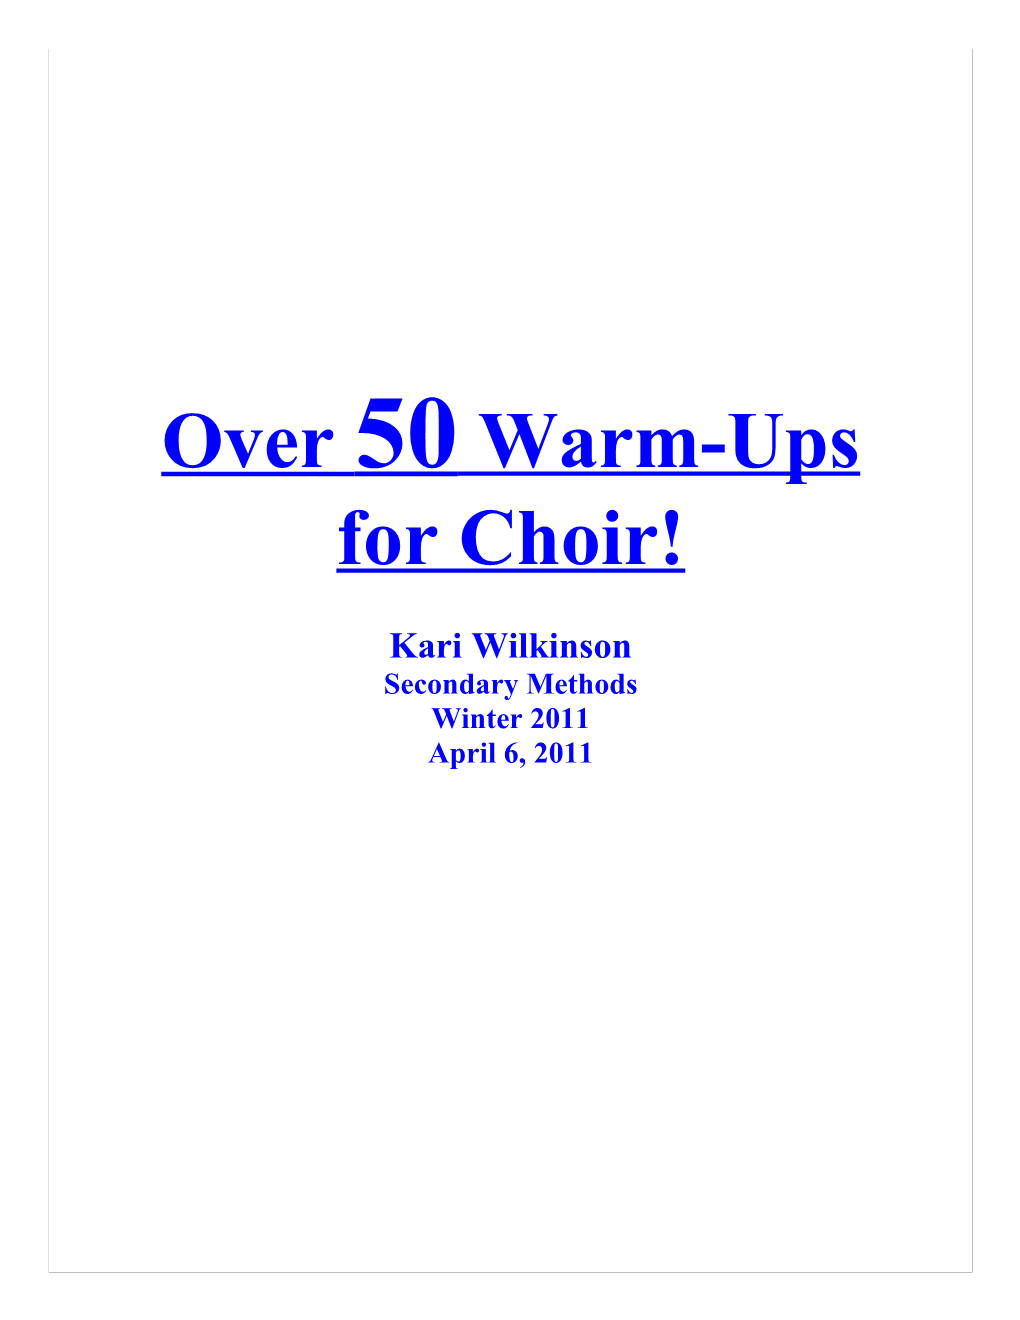 Over 50 Warm-Ups for Choir